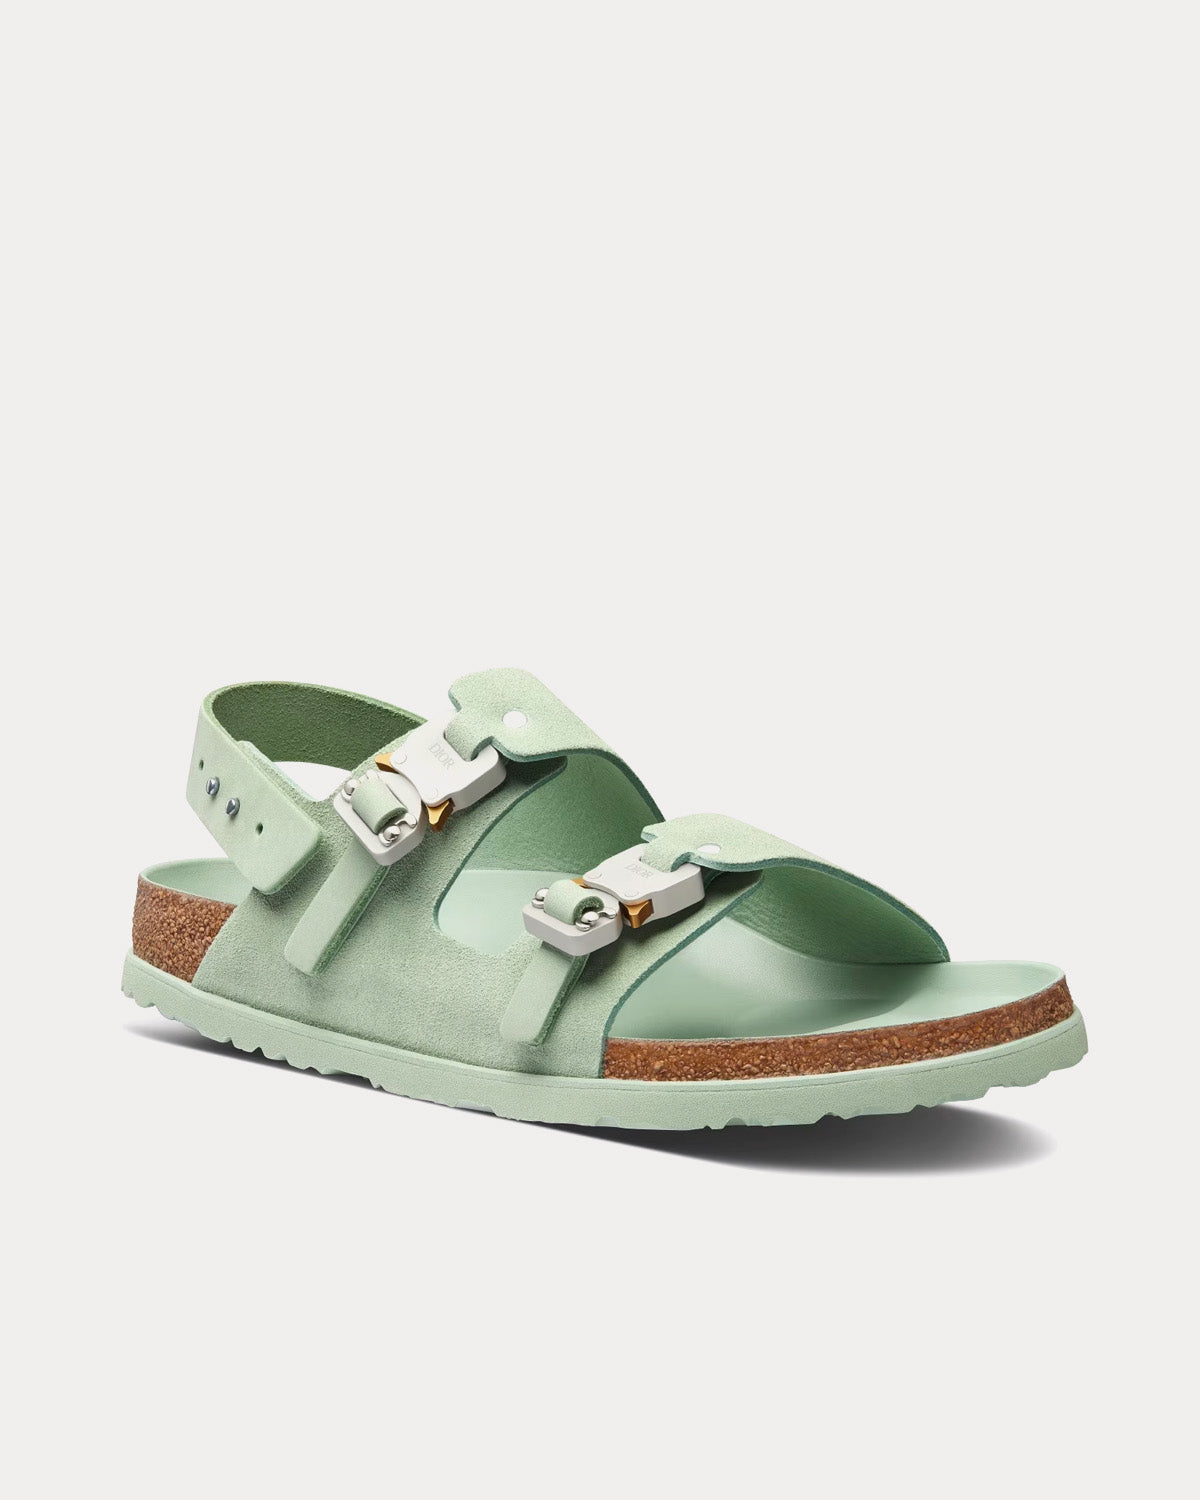 Dior x Birkenstock Milano Pastel Green Nubuck Calfskin Sandals 